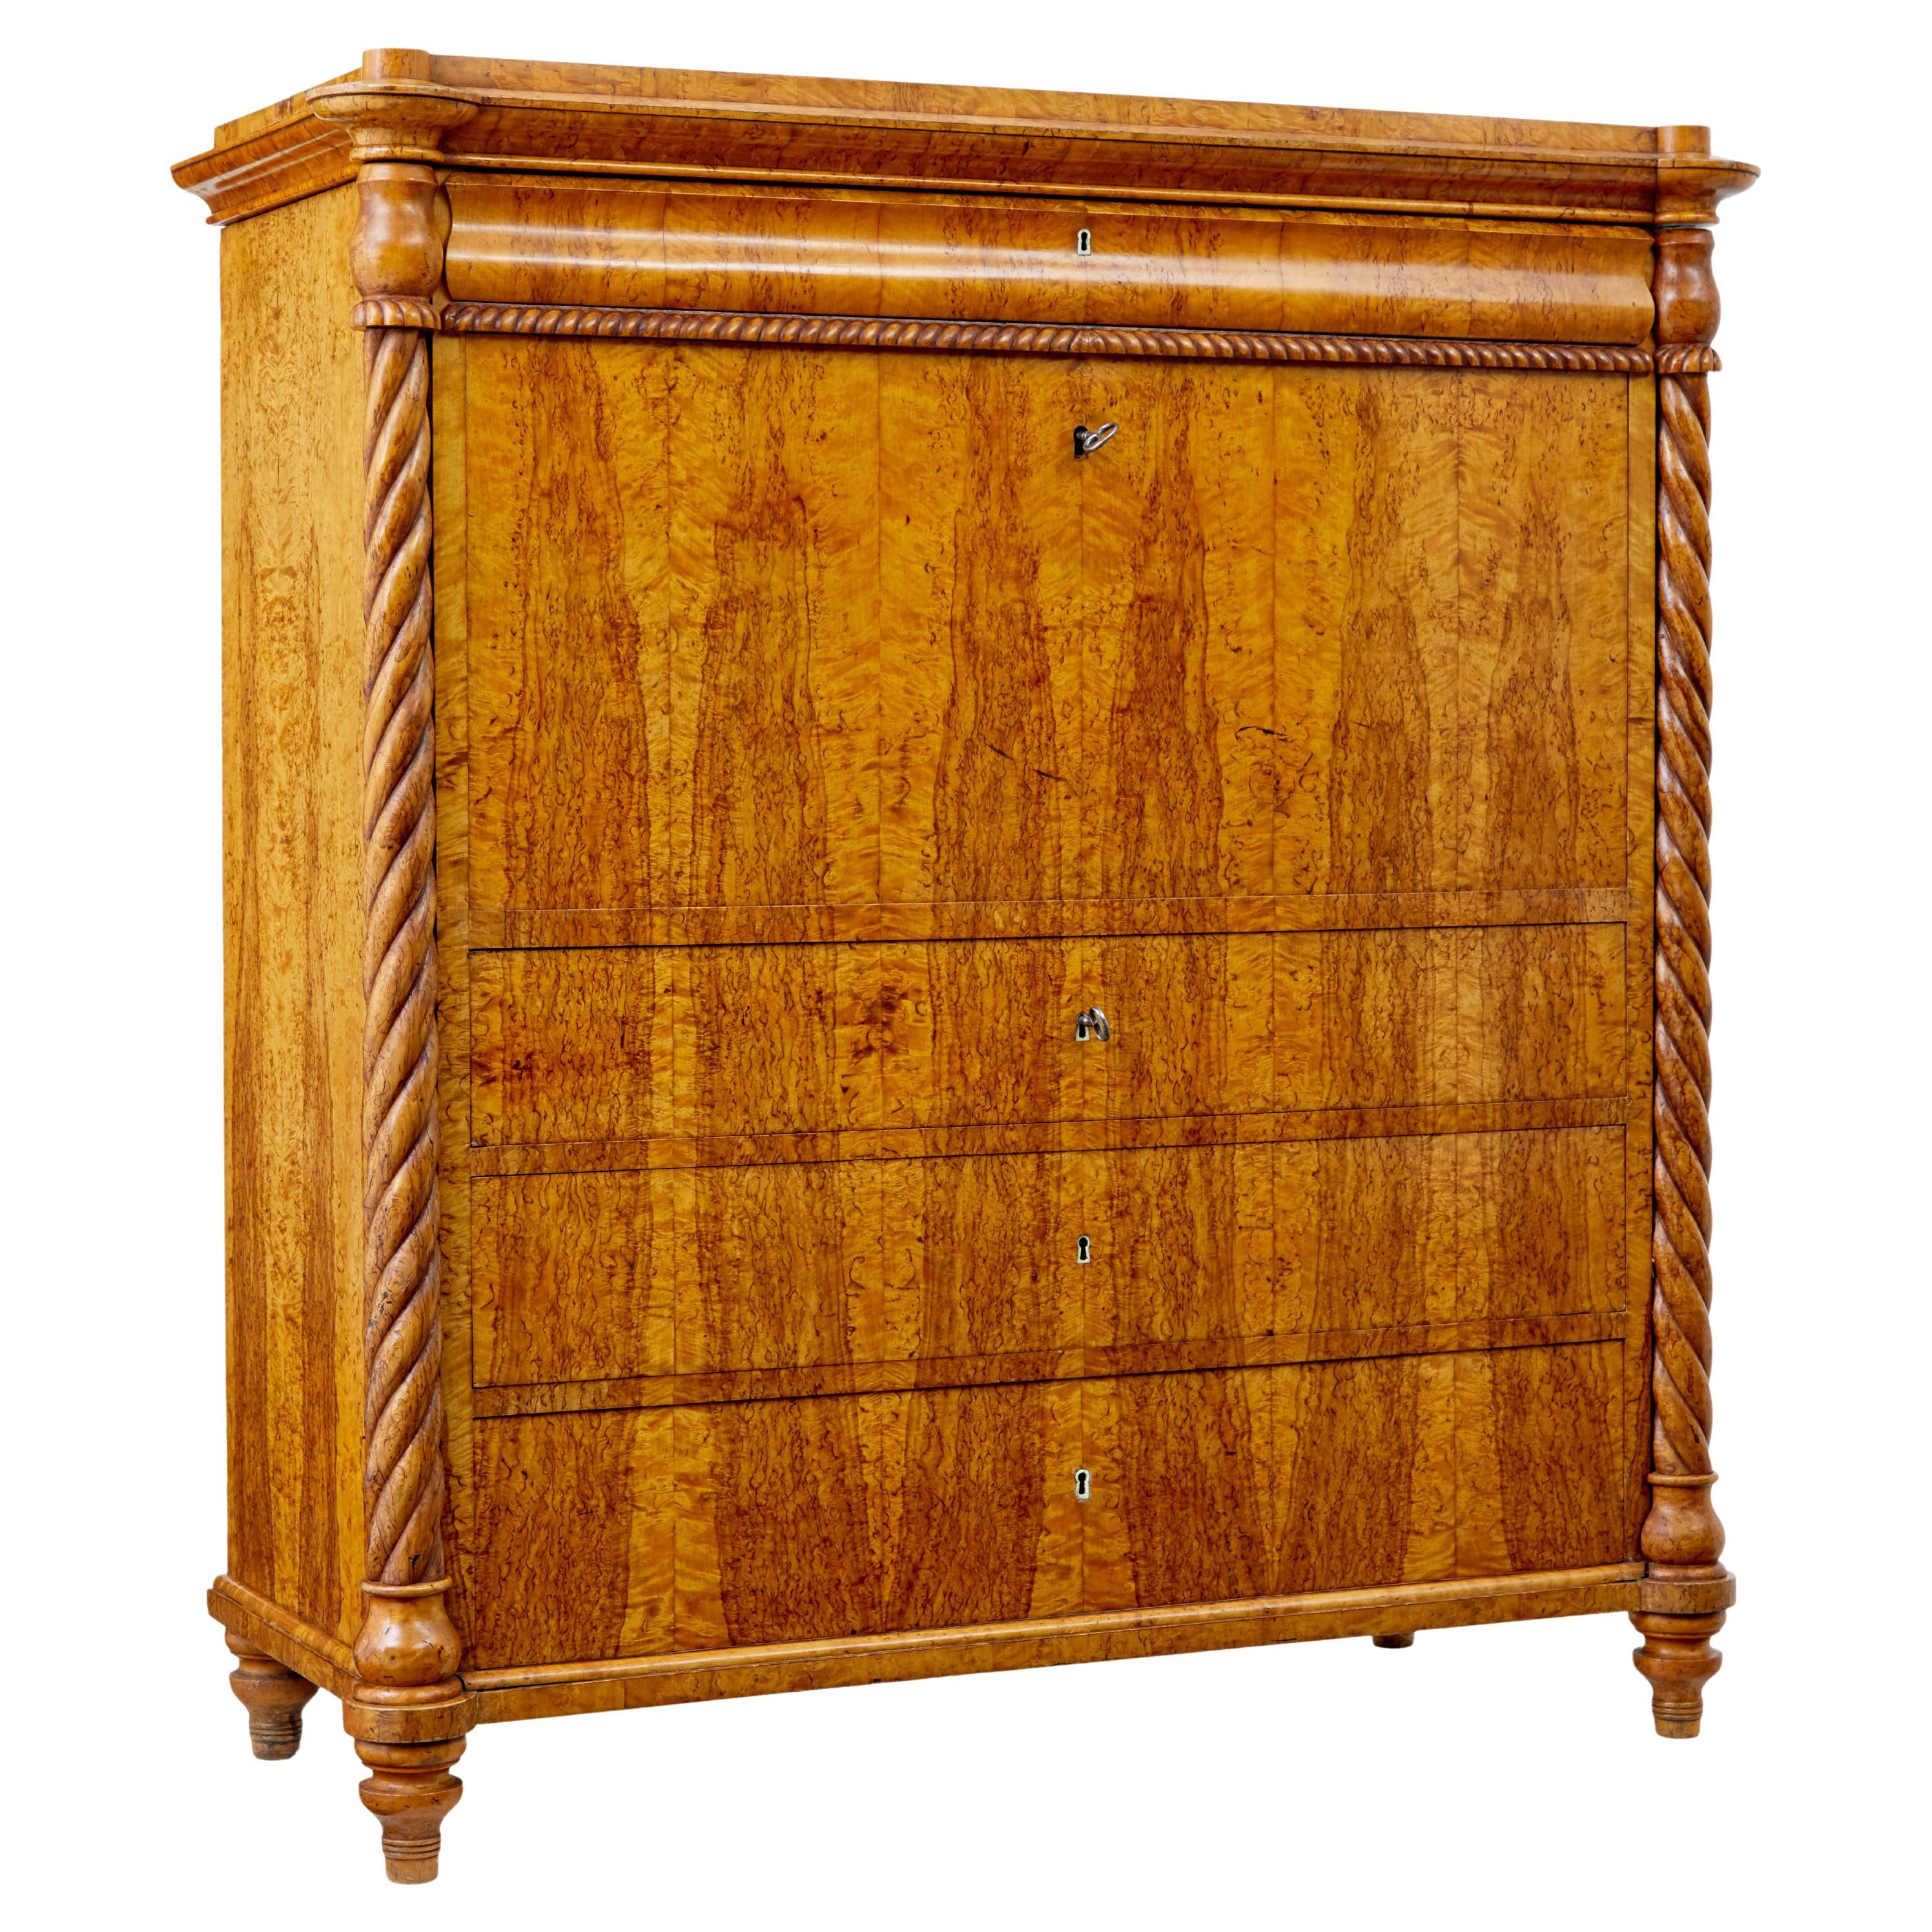 Mid 19th century Swedish burr birch secretaire chest For Sale